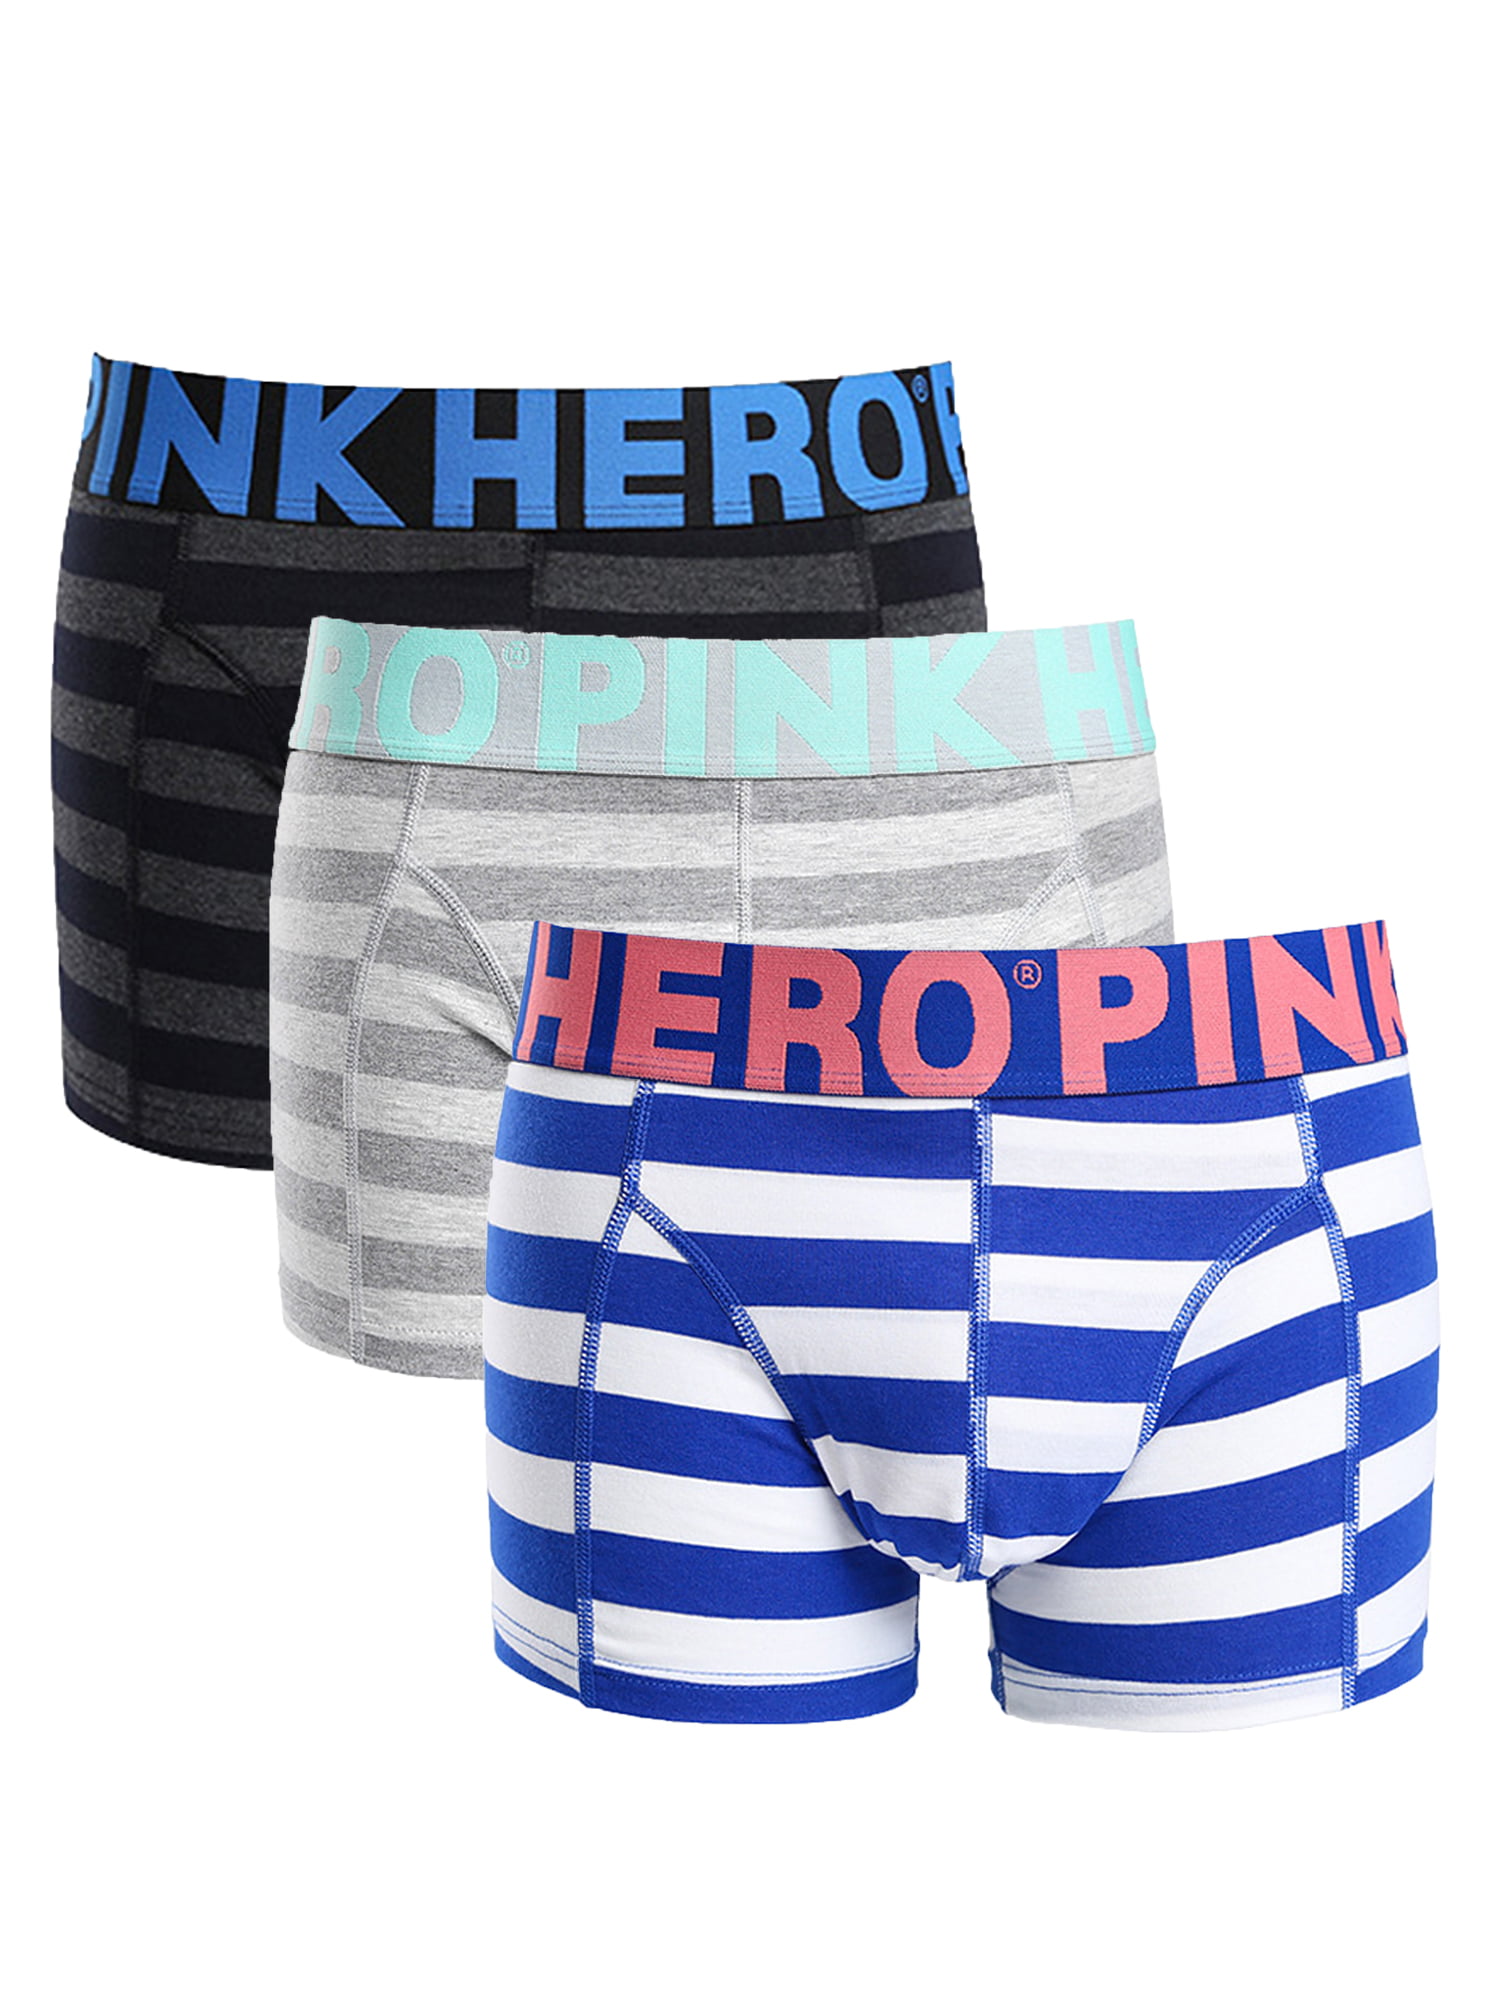 Underwear for Men Pack Striped Boxer Briefs Breathable Trunks Long Leg Boxer Shorts Comfort Stretch Underpants 